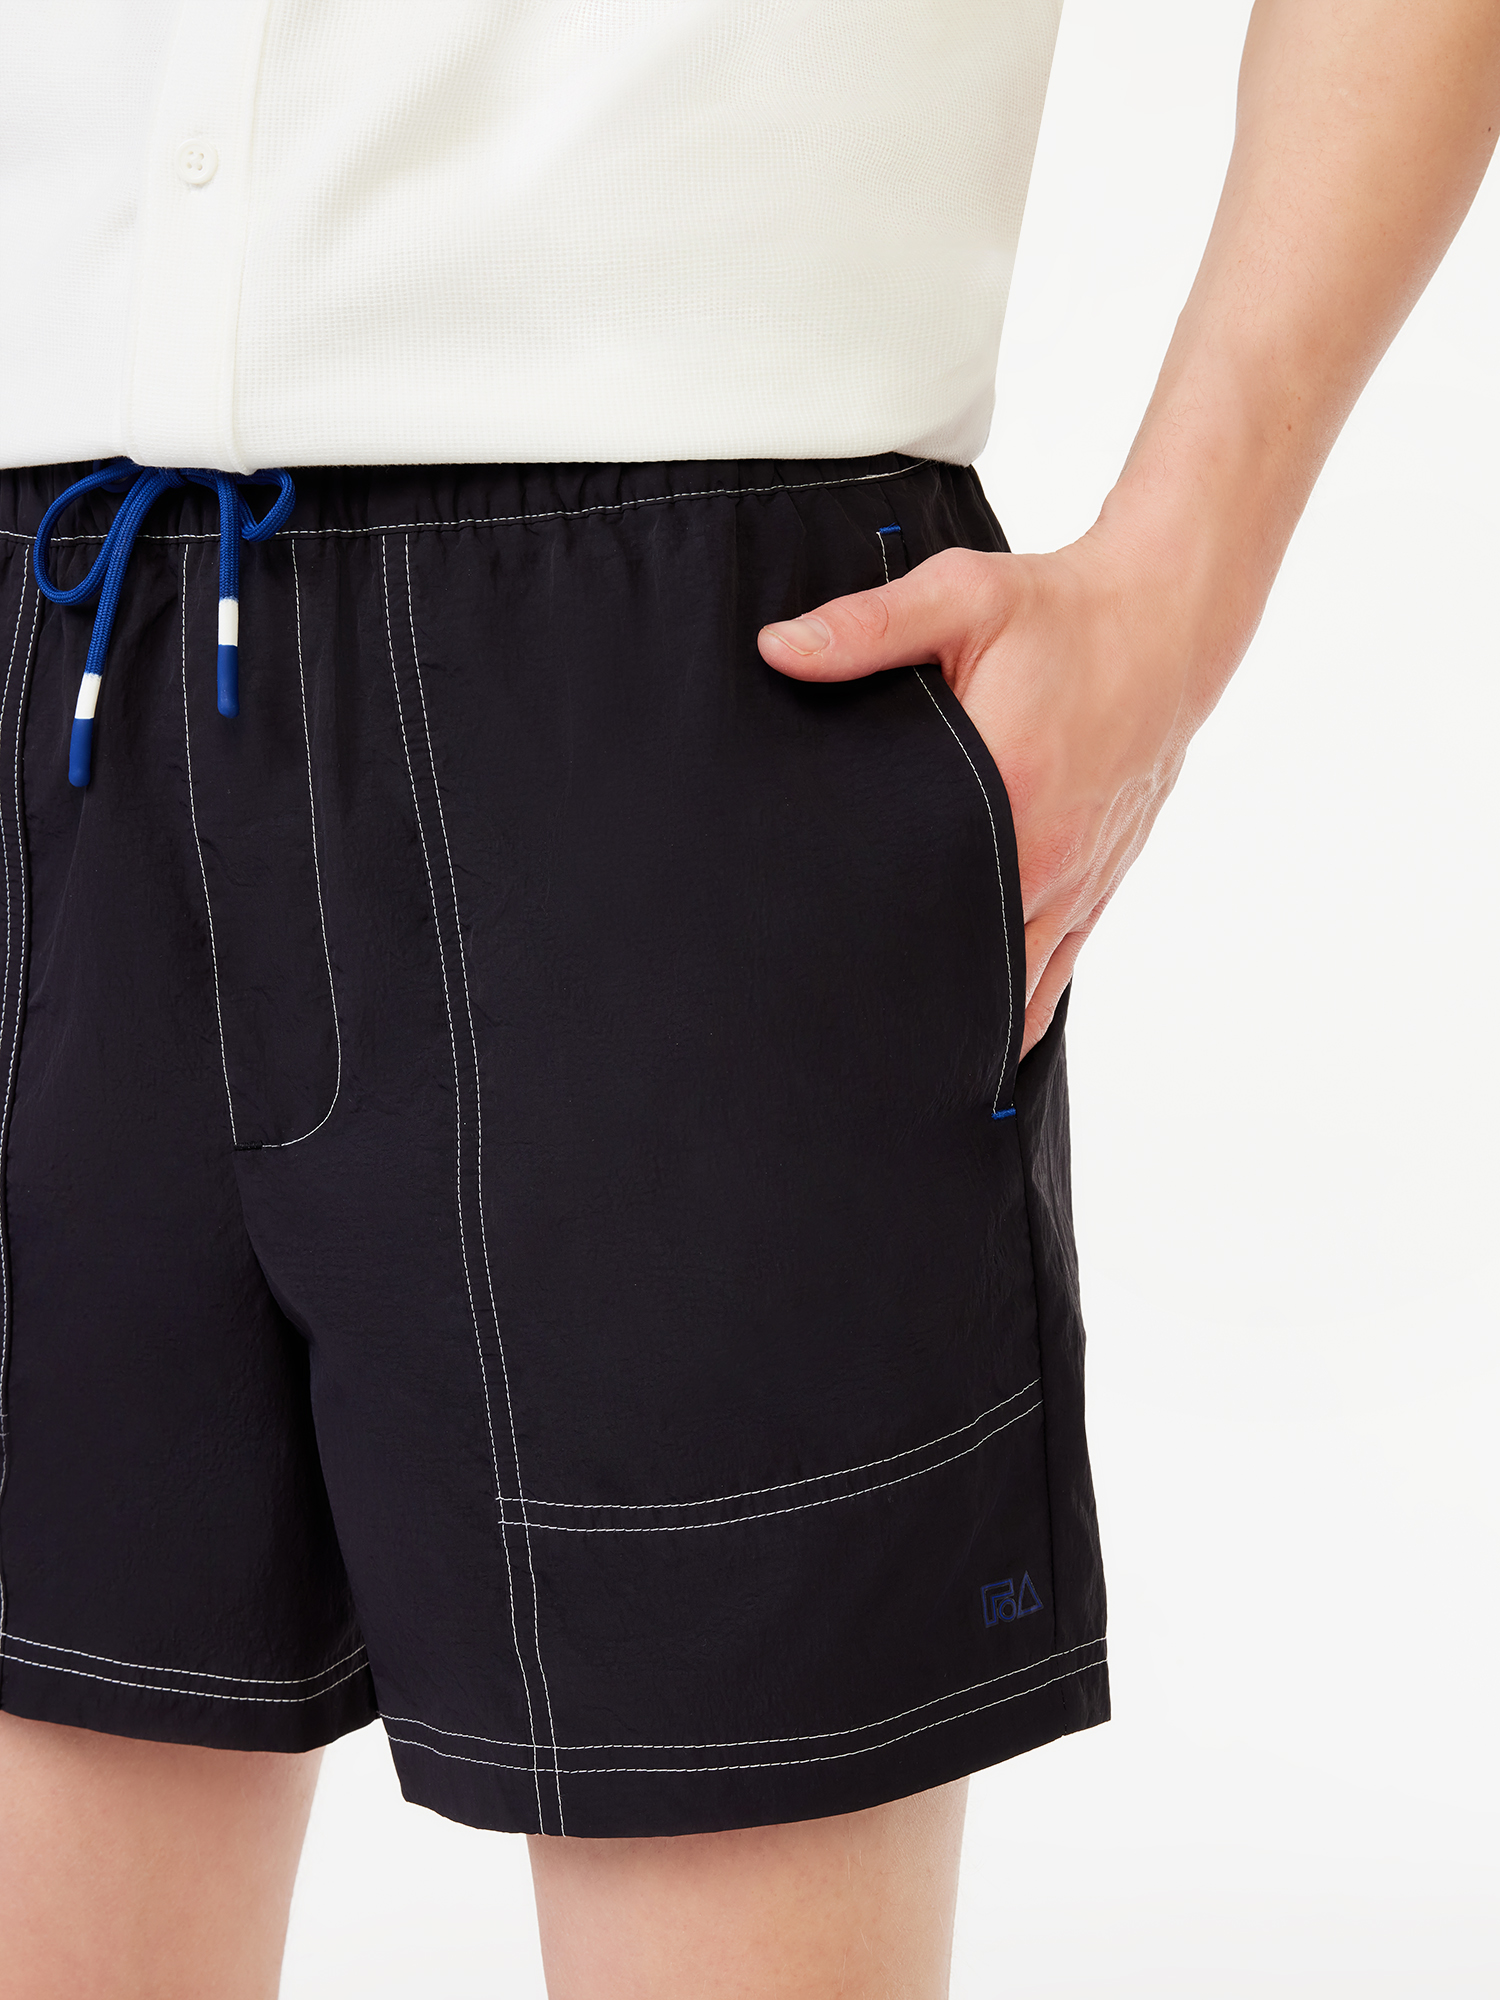 Free Assembly Men's Crinkle Nylon Shorts - Walmart.com